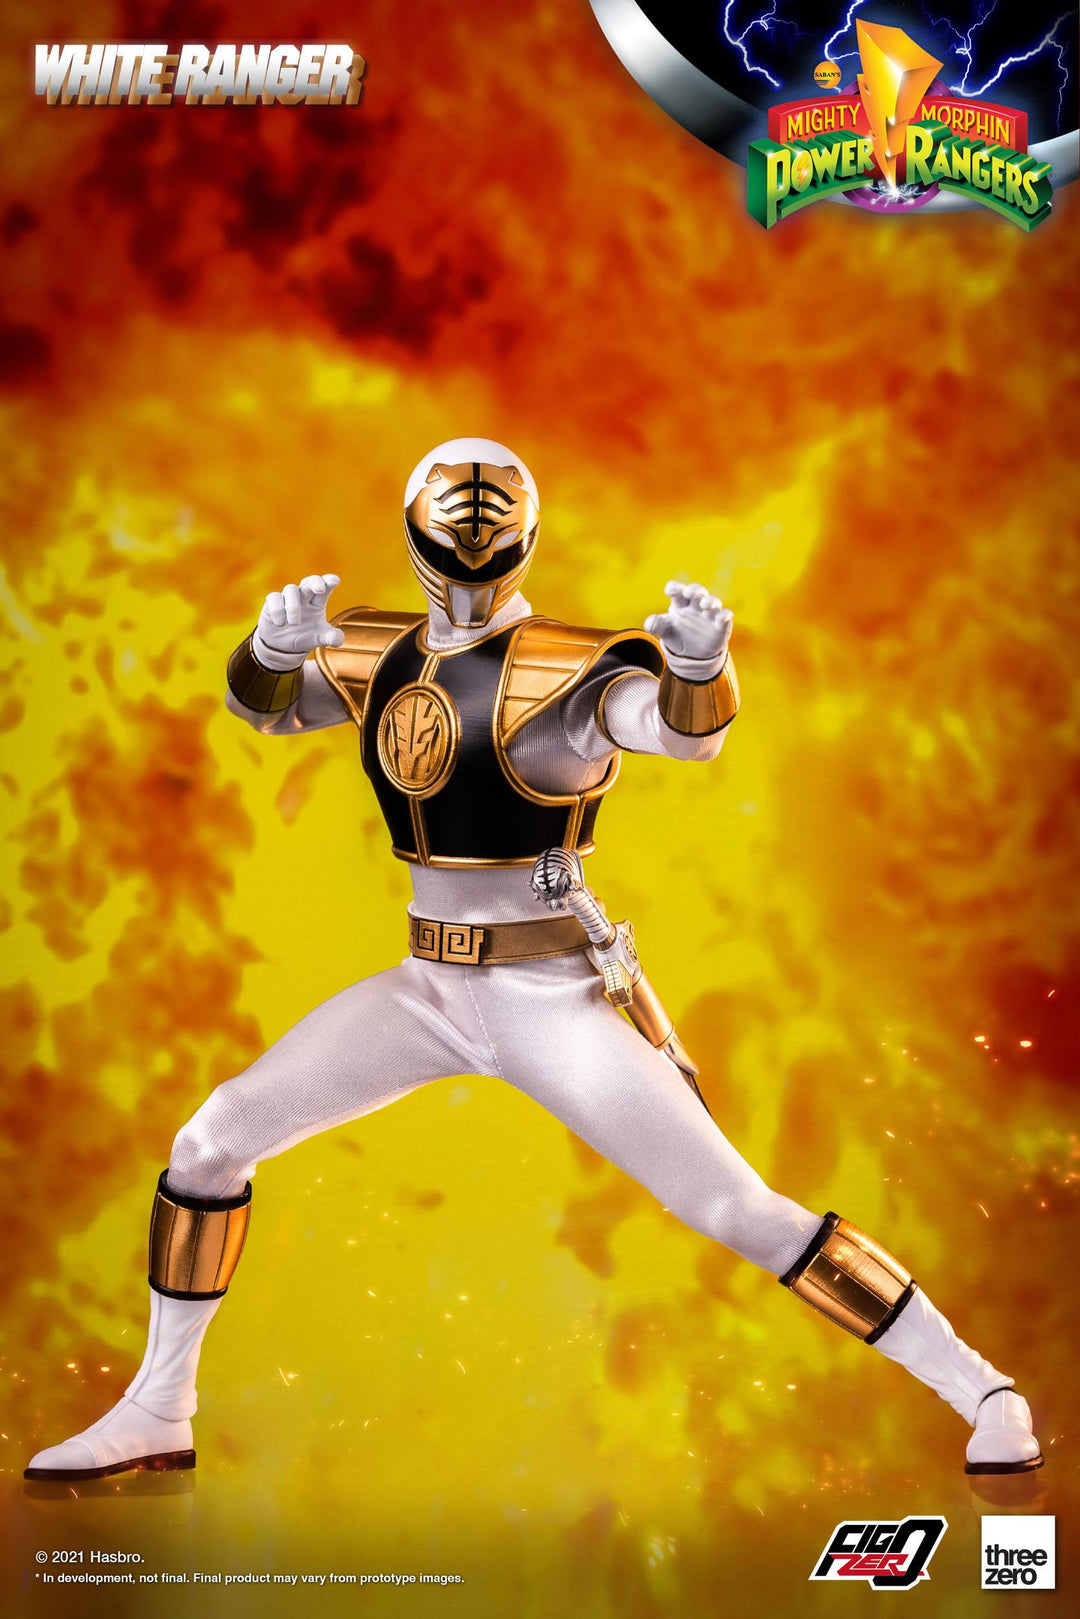 Mighty Morphin Power Rangers FigZero White Ranger 1-6 Scale Figure